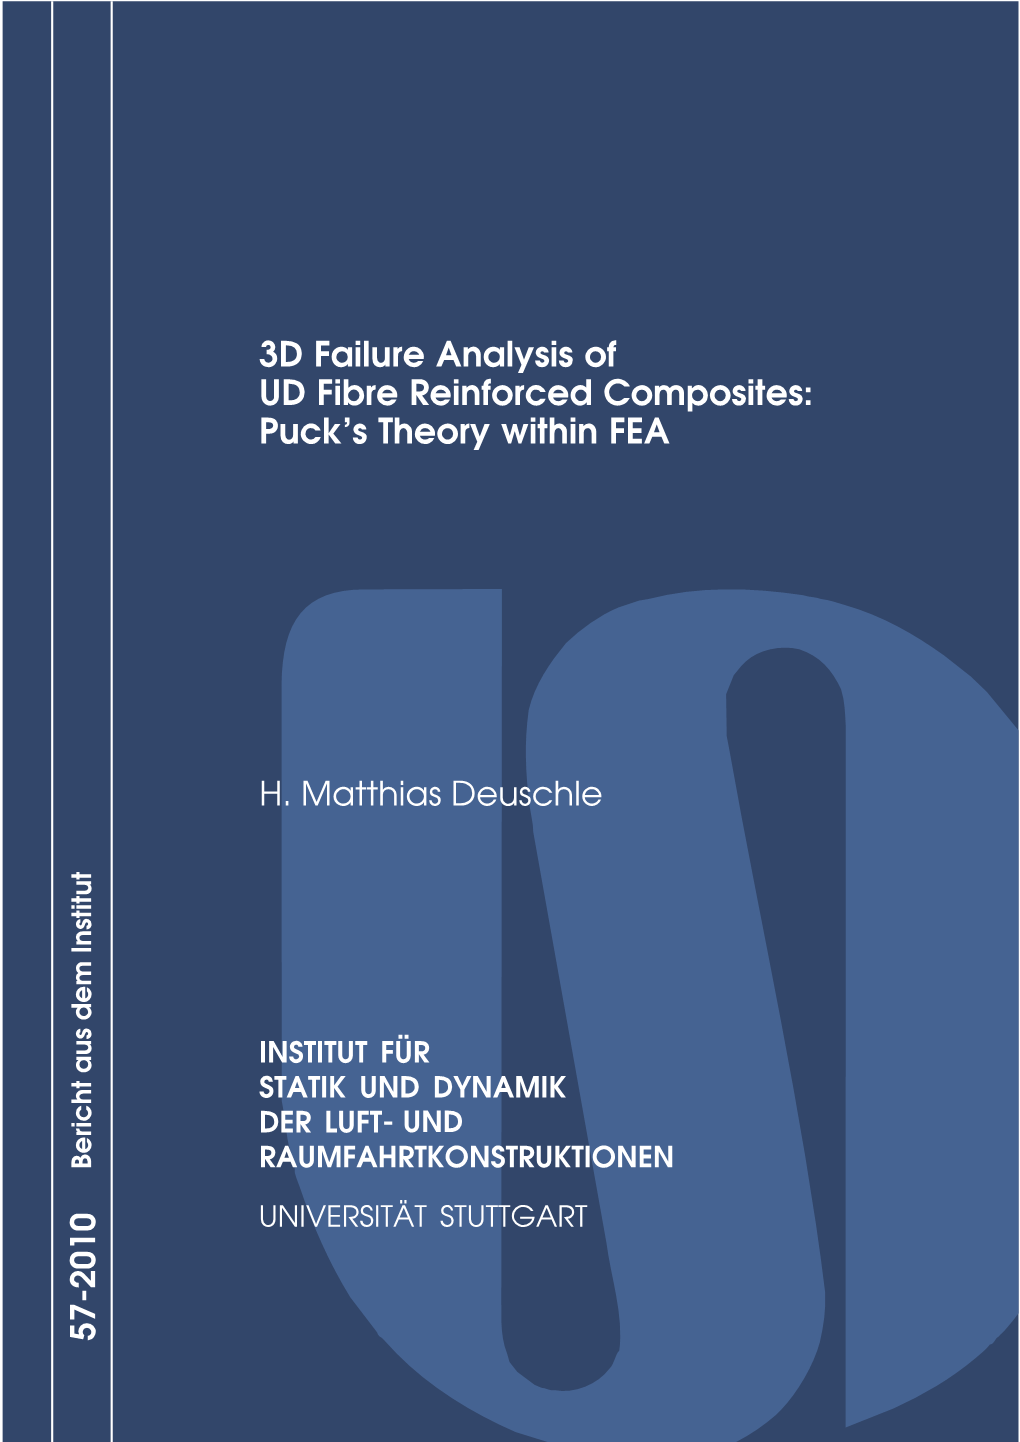 3D Failure Analysis of UD Fibre Reinforced Composites: Puck's